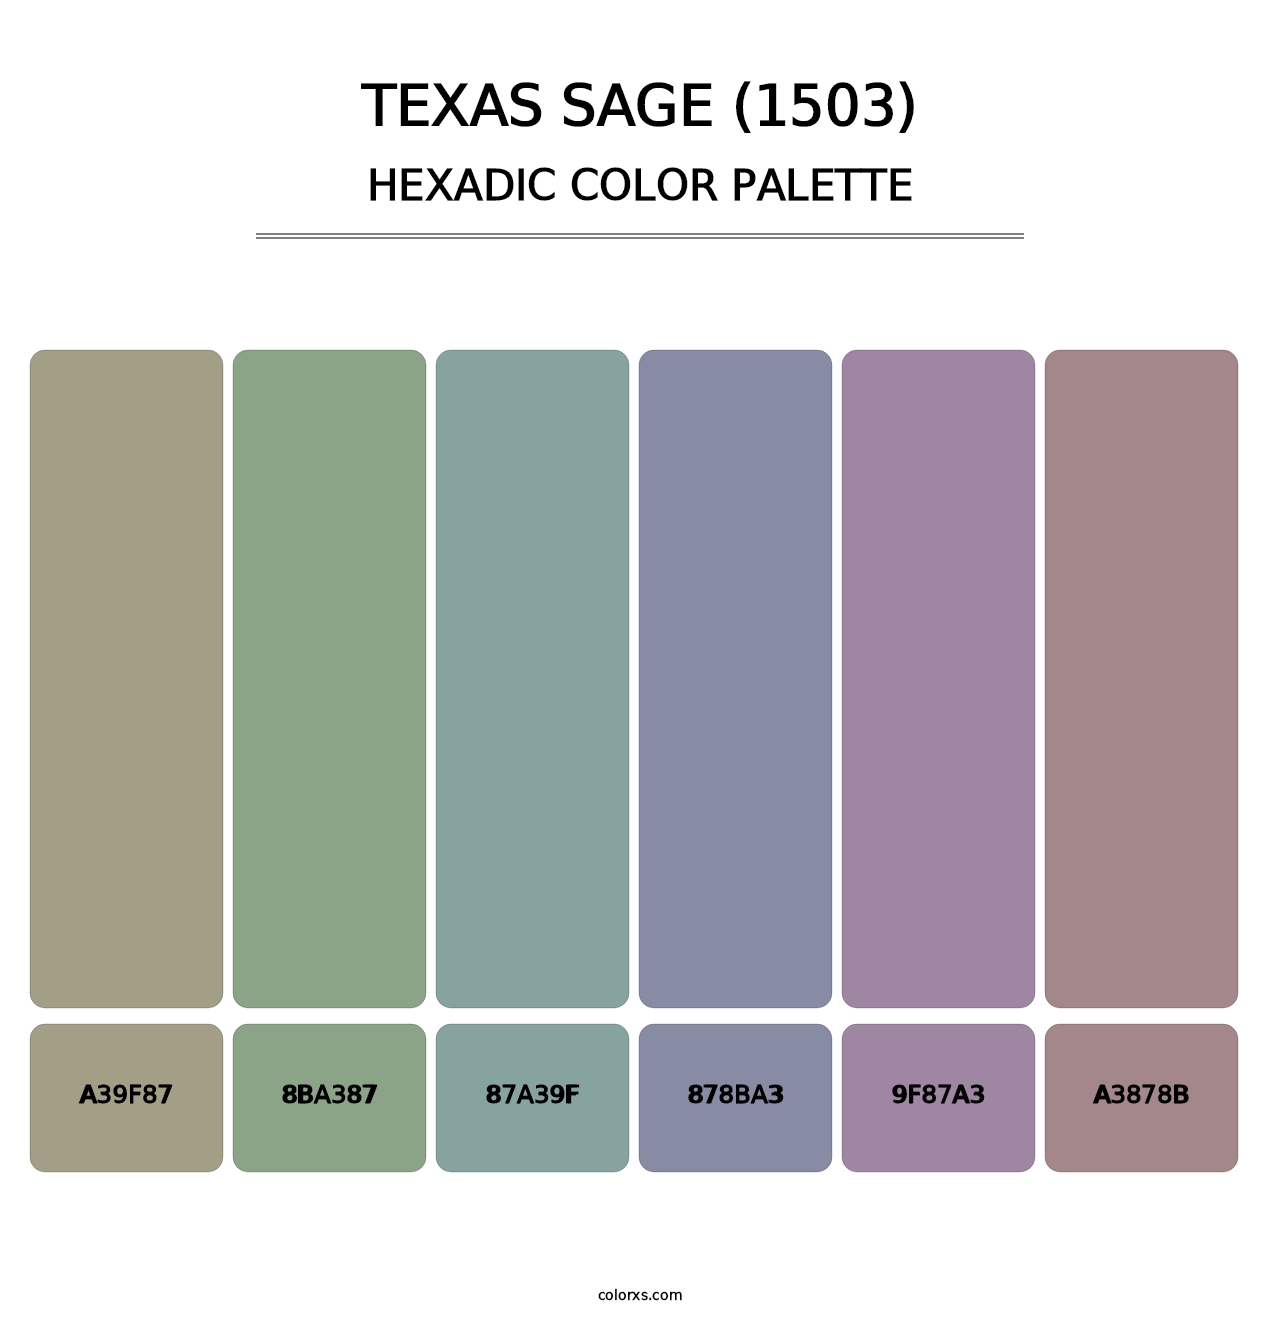 Texas Sage (1503) - Hexadic Color Palette